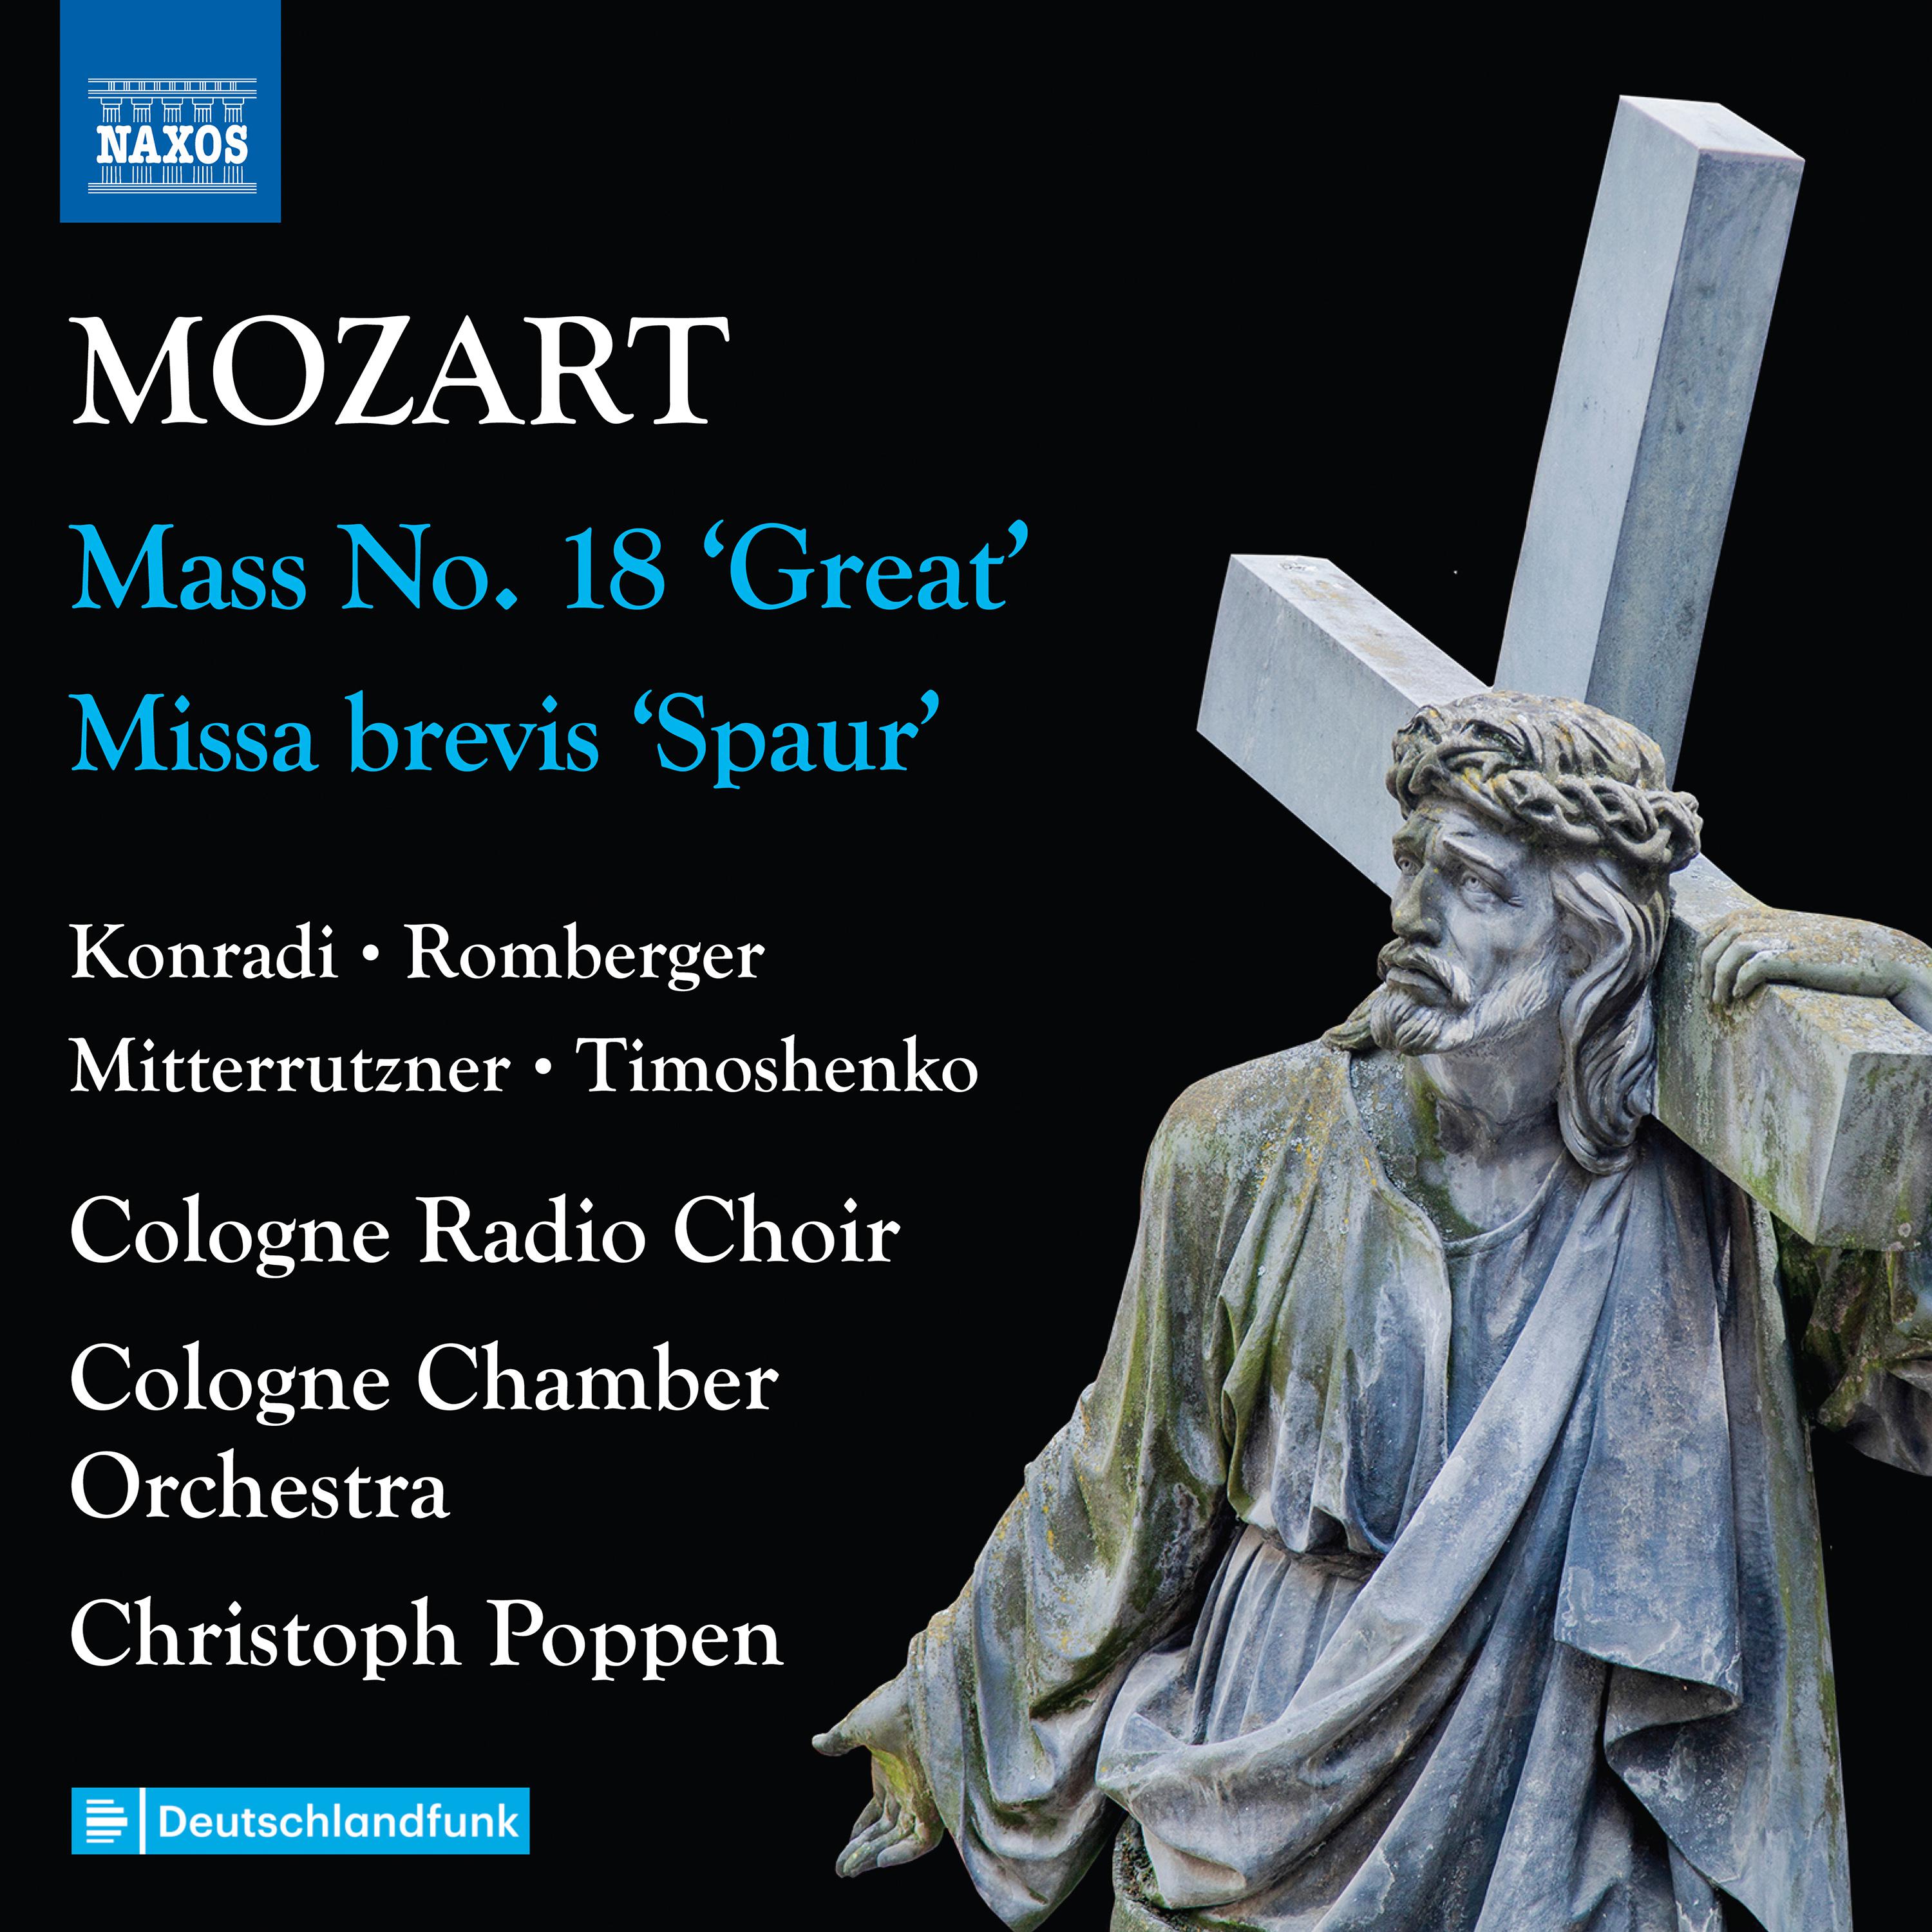 Cologne West German Radio Chorus - Missa brevis in C Major, K. 258, 